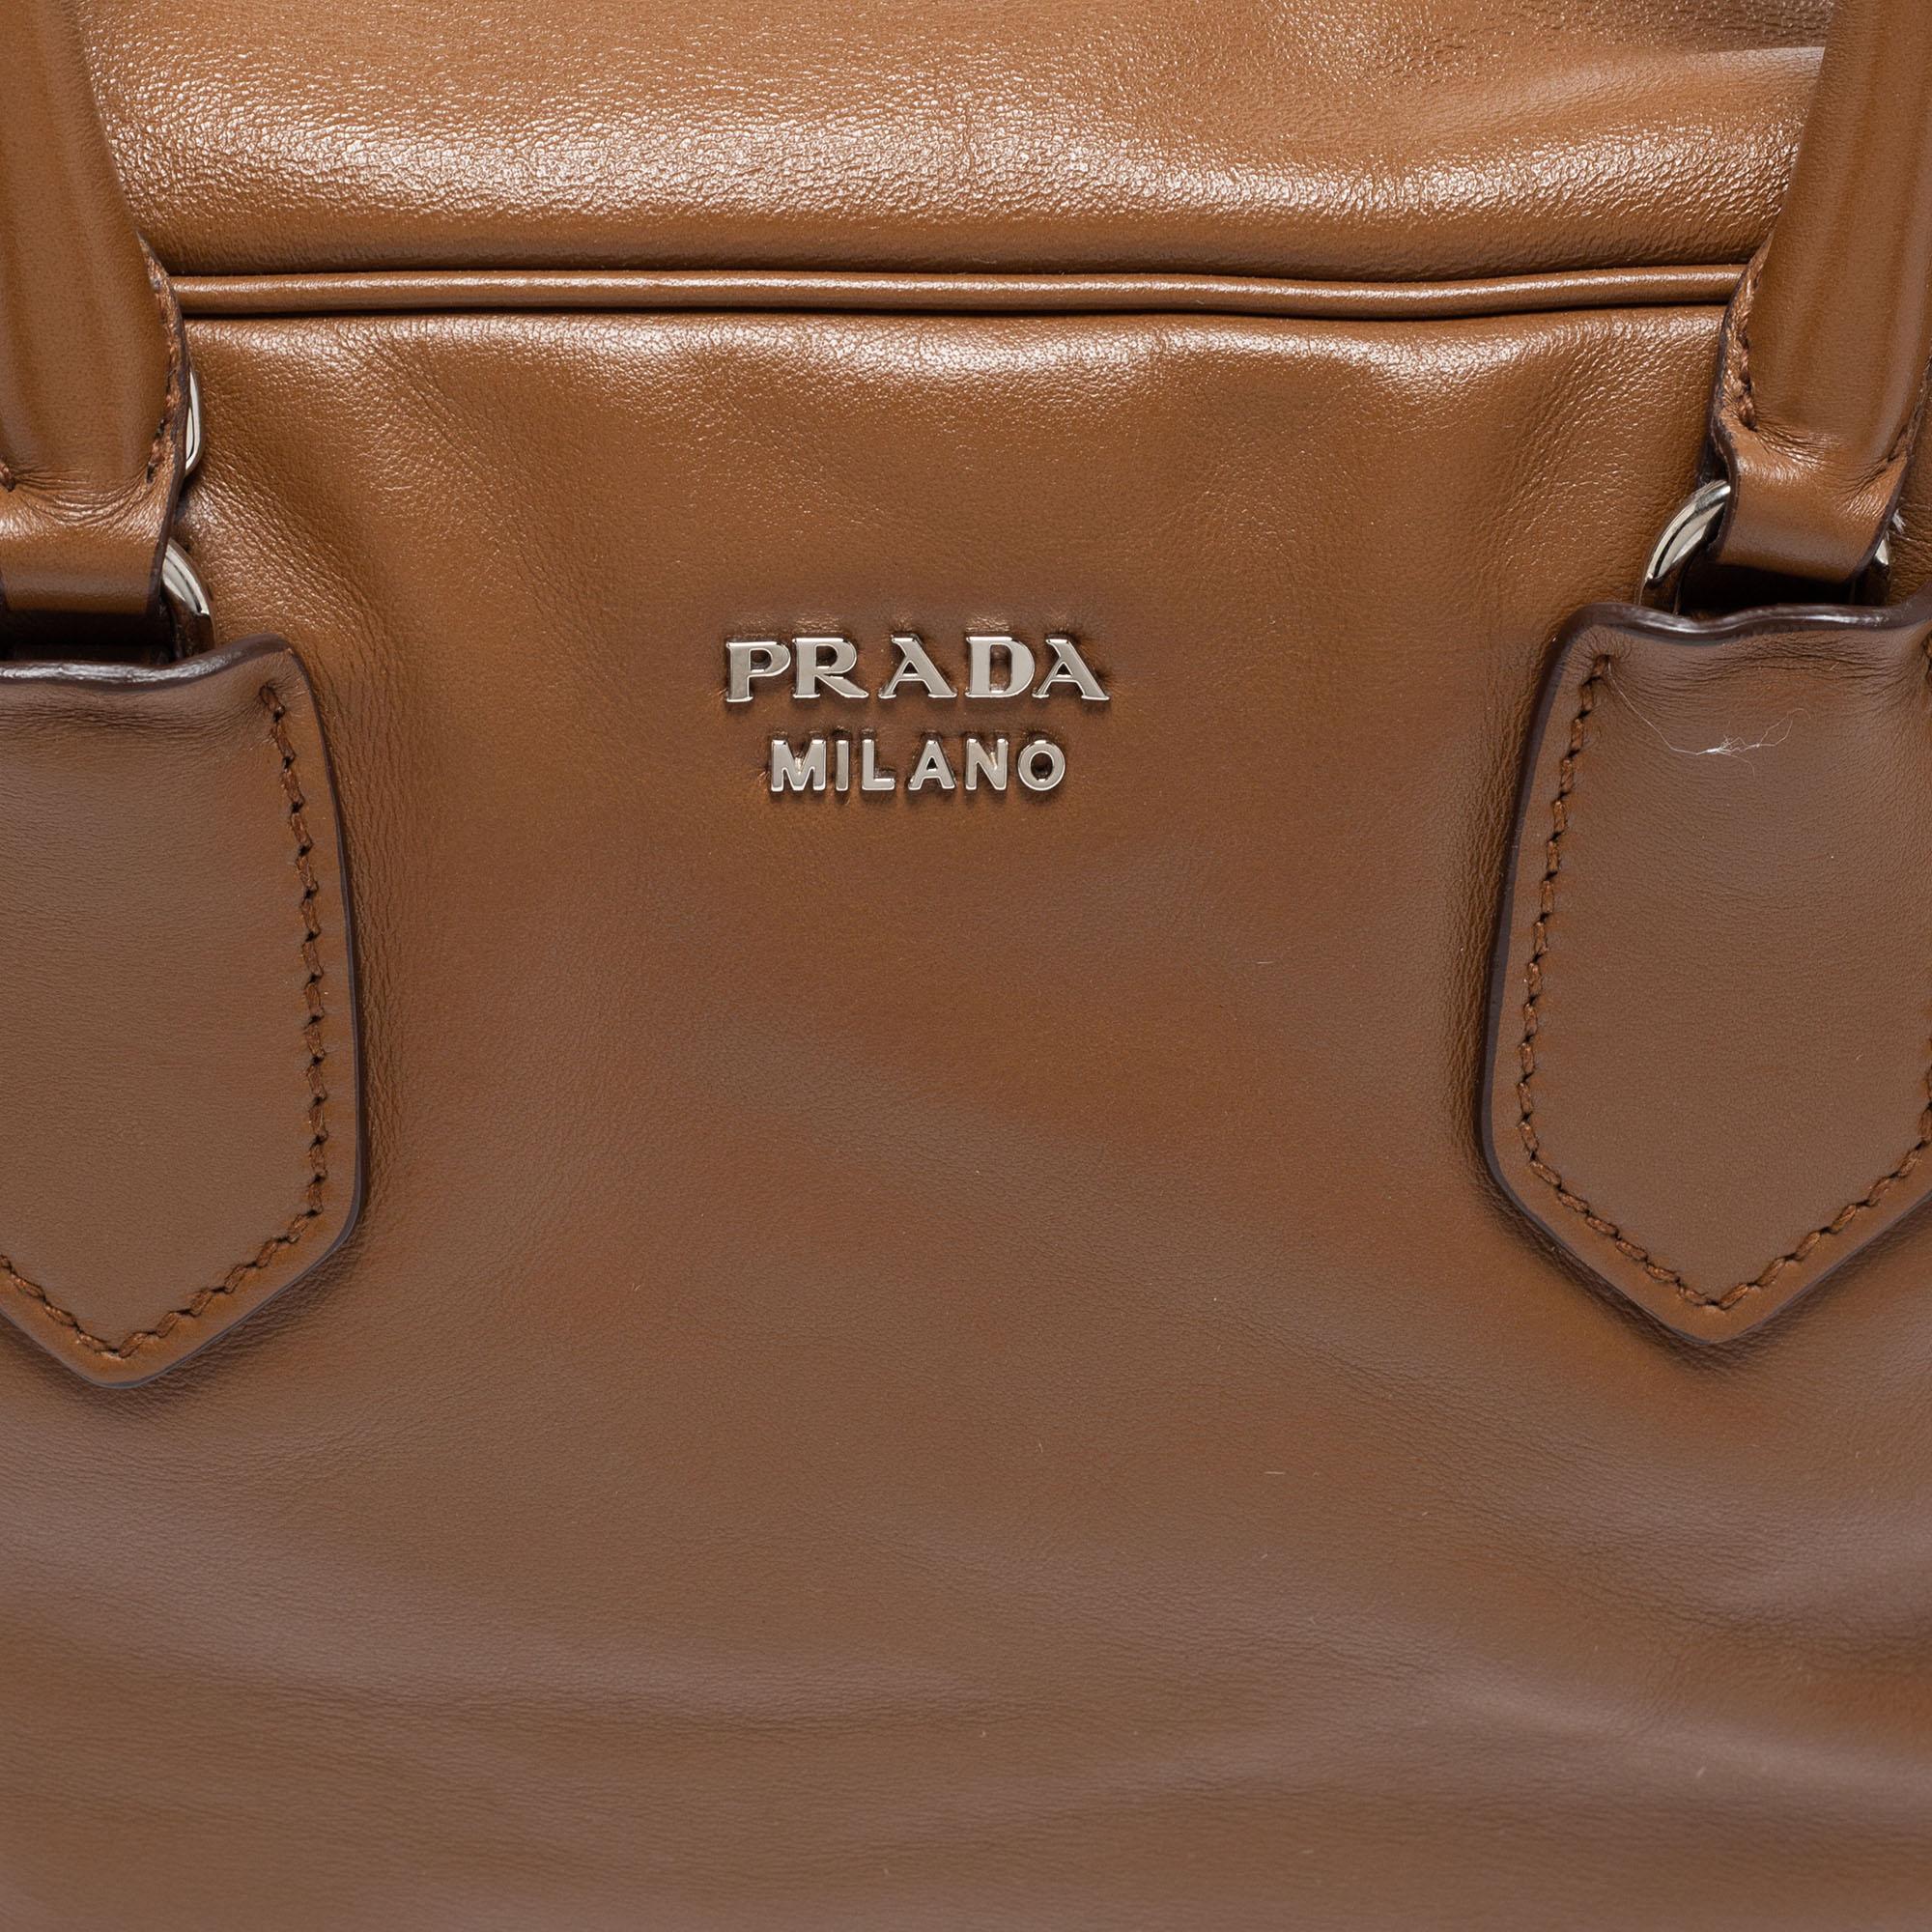 Prada Brown/Turquoise Leather Inside Bag 7